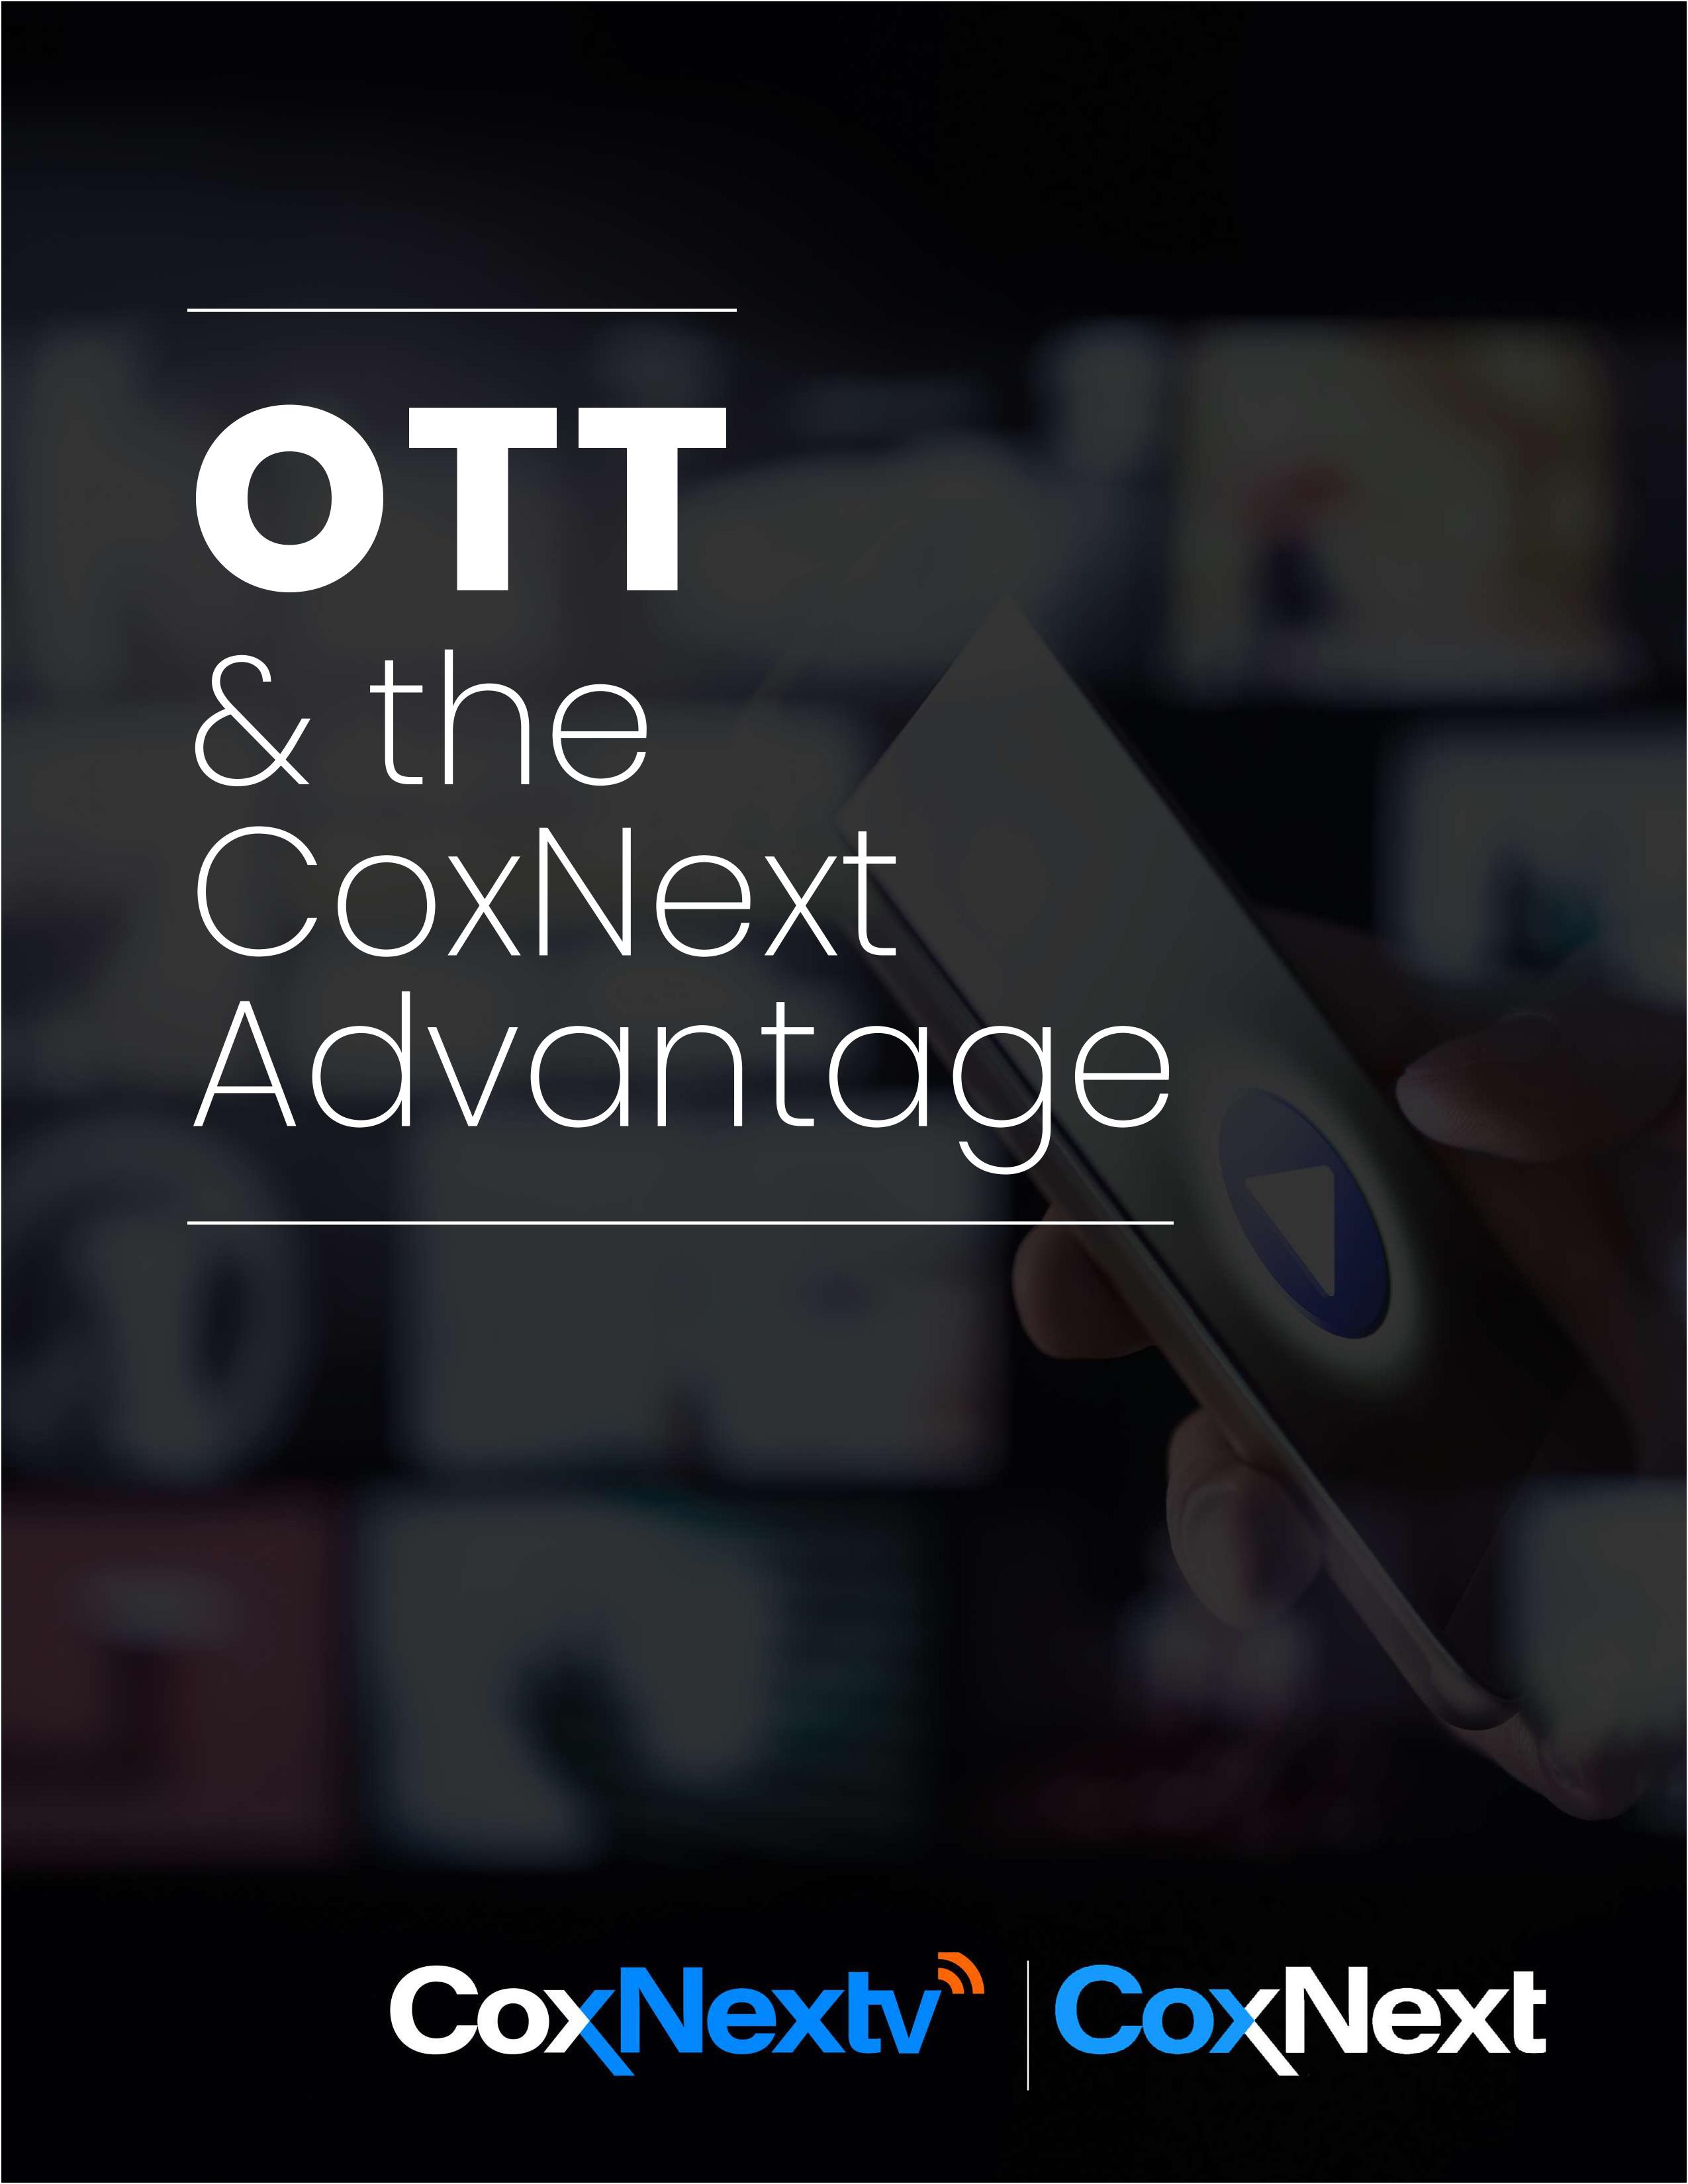 OTT CoxNext Advantage cover